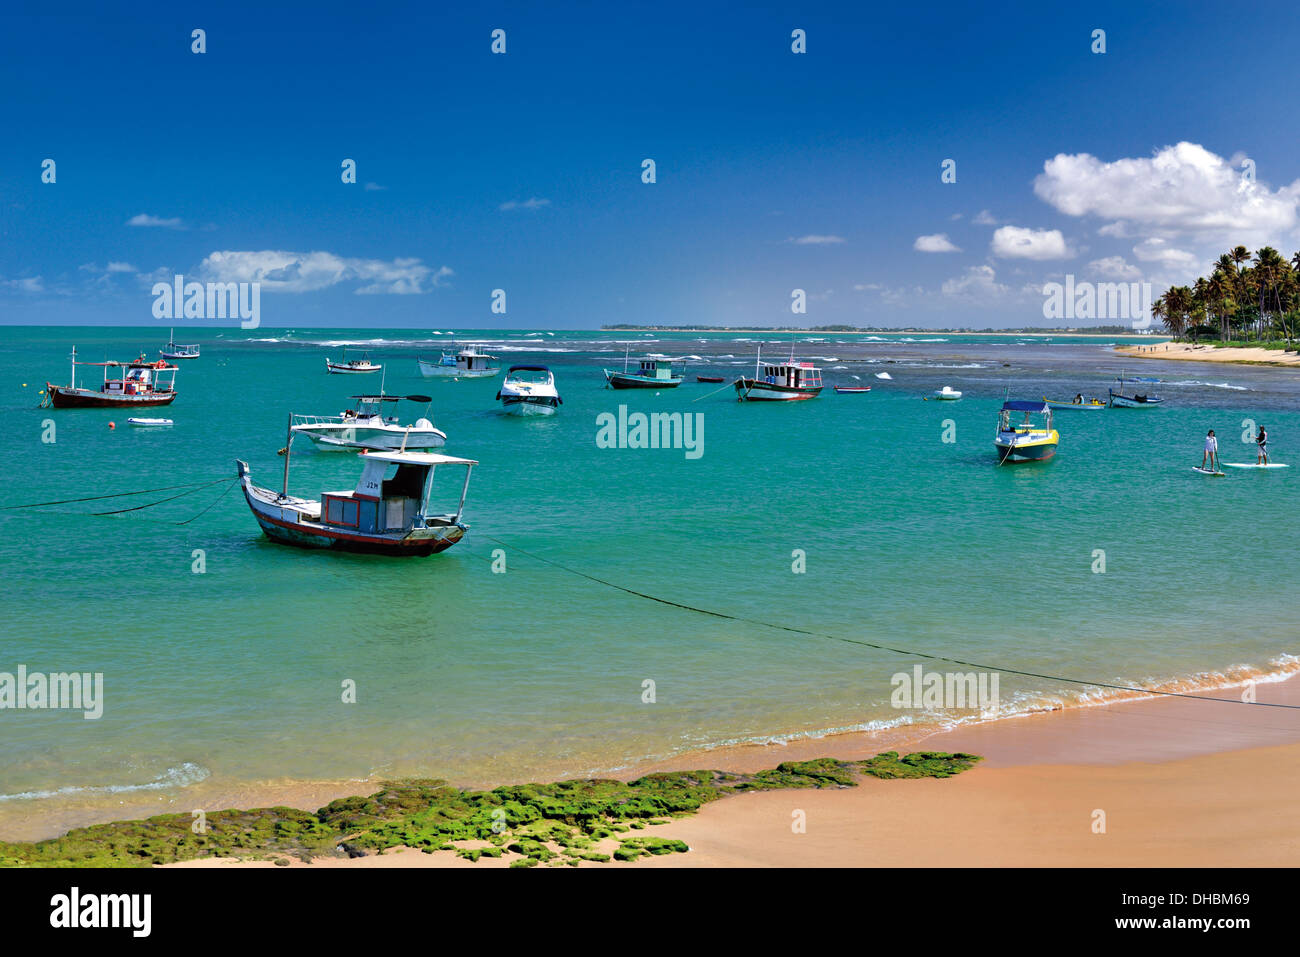 Brazil, Bahia: Boats anchoring in the calm waters of beach Praia do Forte Stock Photo